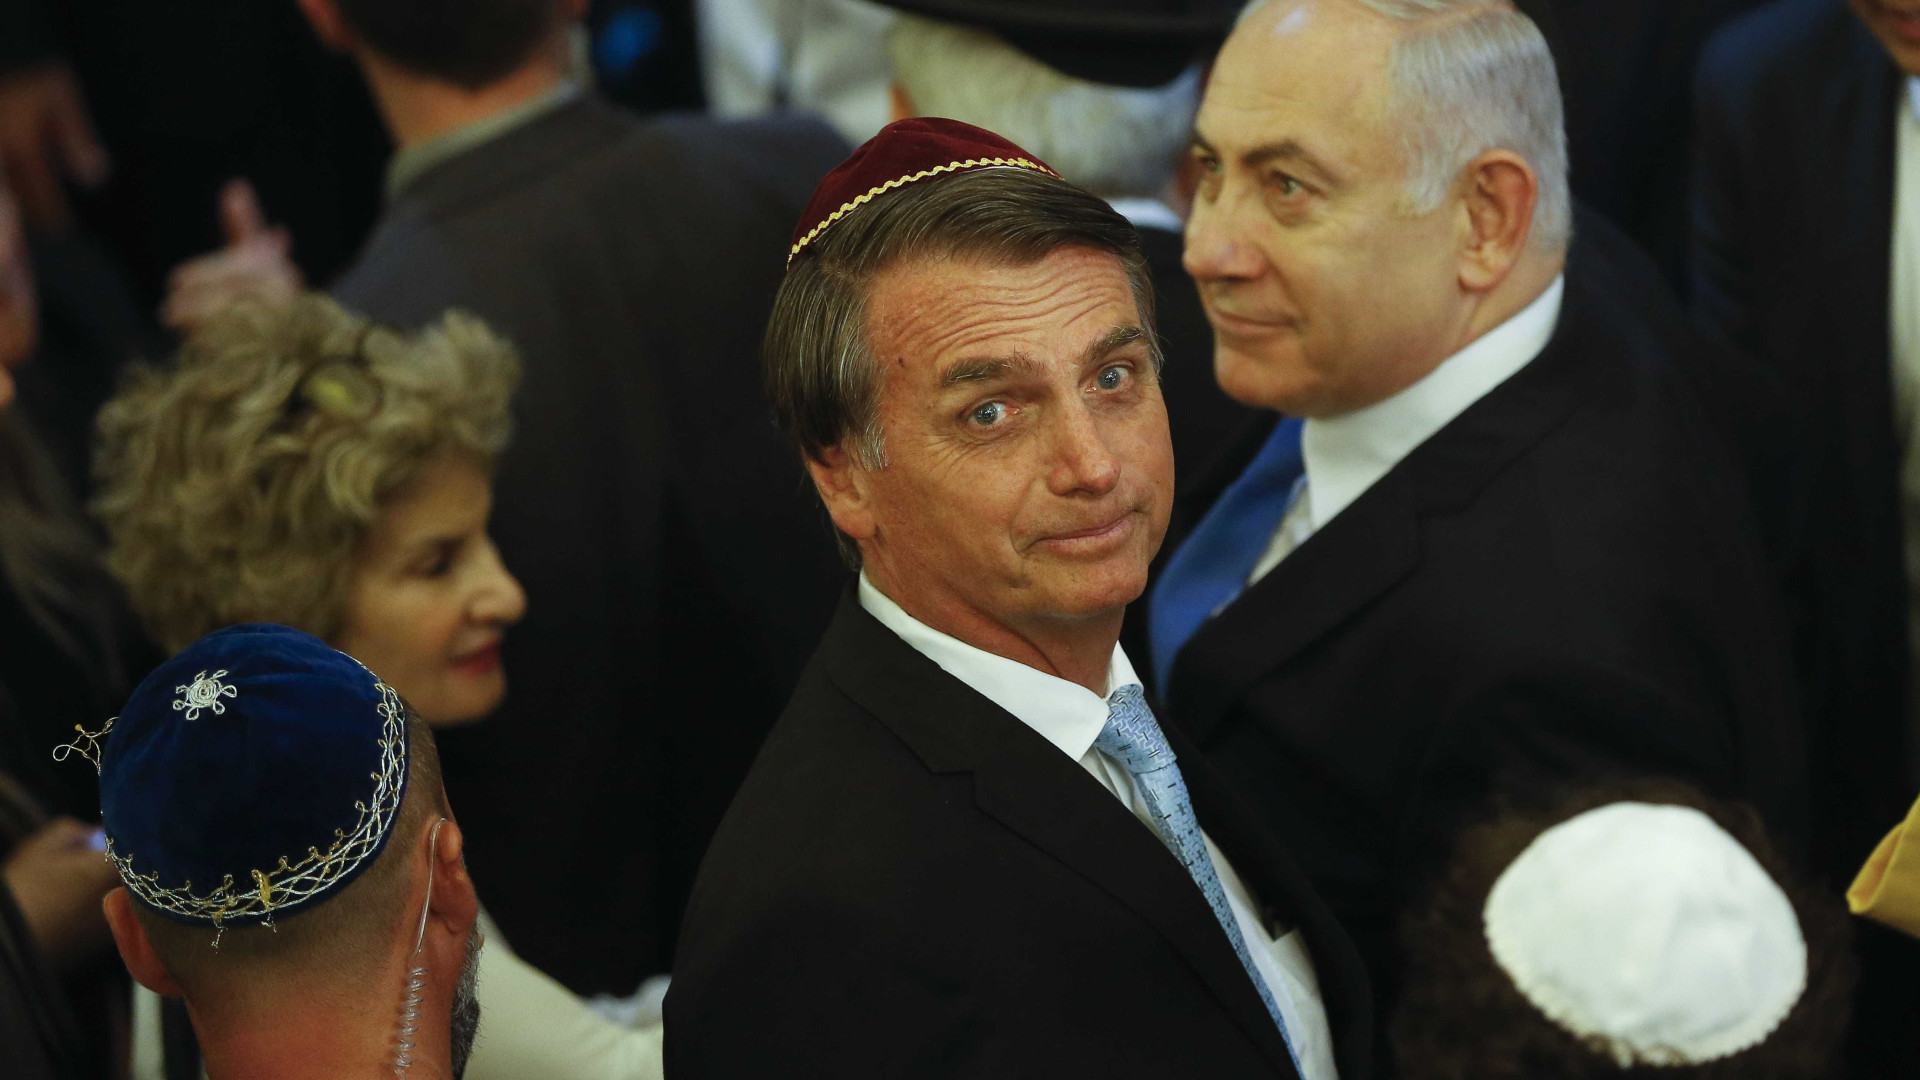 Premiê de Israel puxa coro de ‘mito’ em visita a sinagoga com Bolsonaro